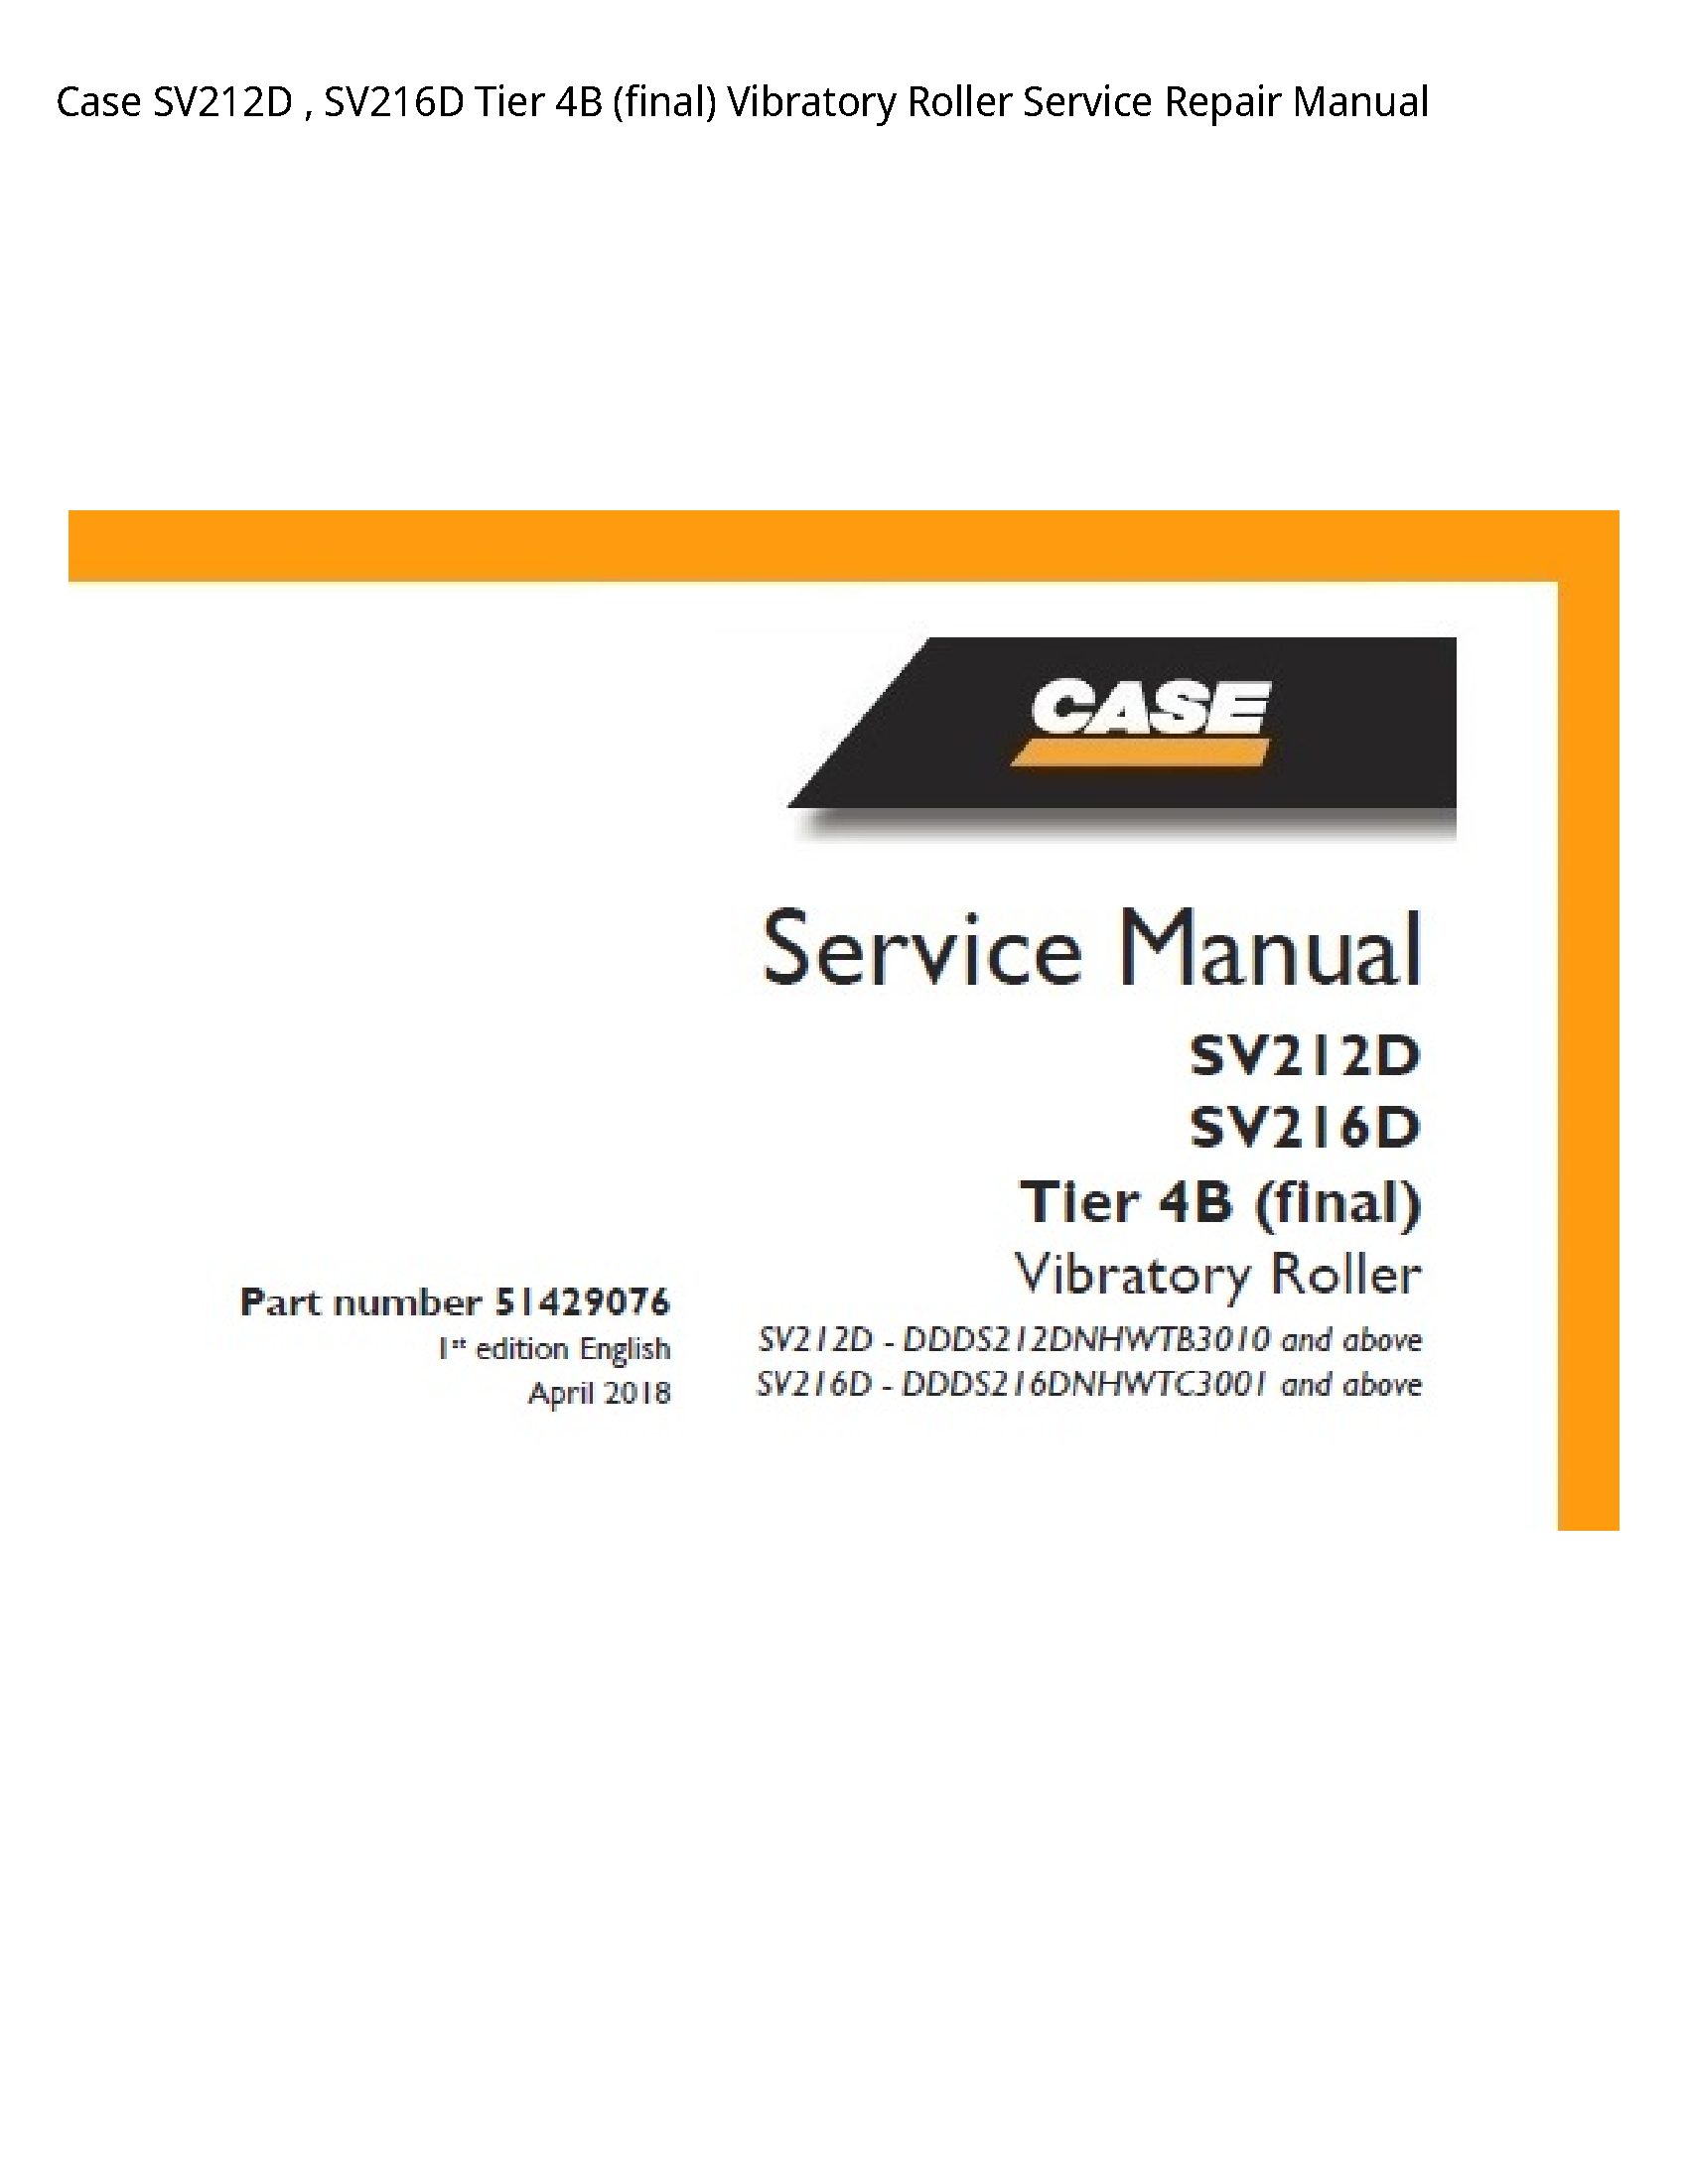 Case/Case IH SV212D Tier (final) Vibratory Roller manual